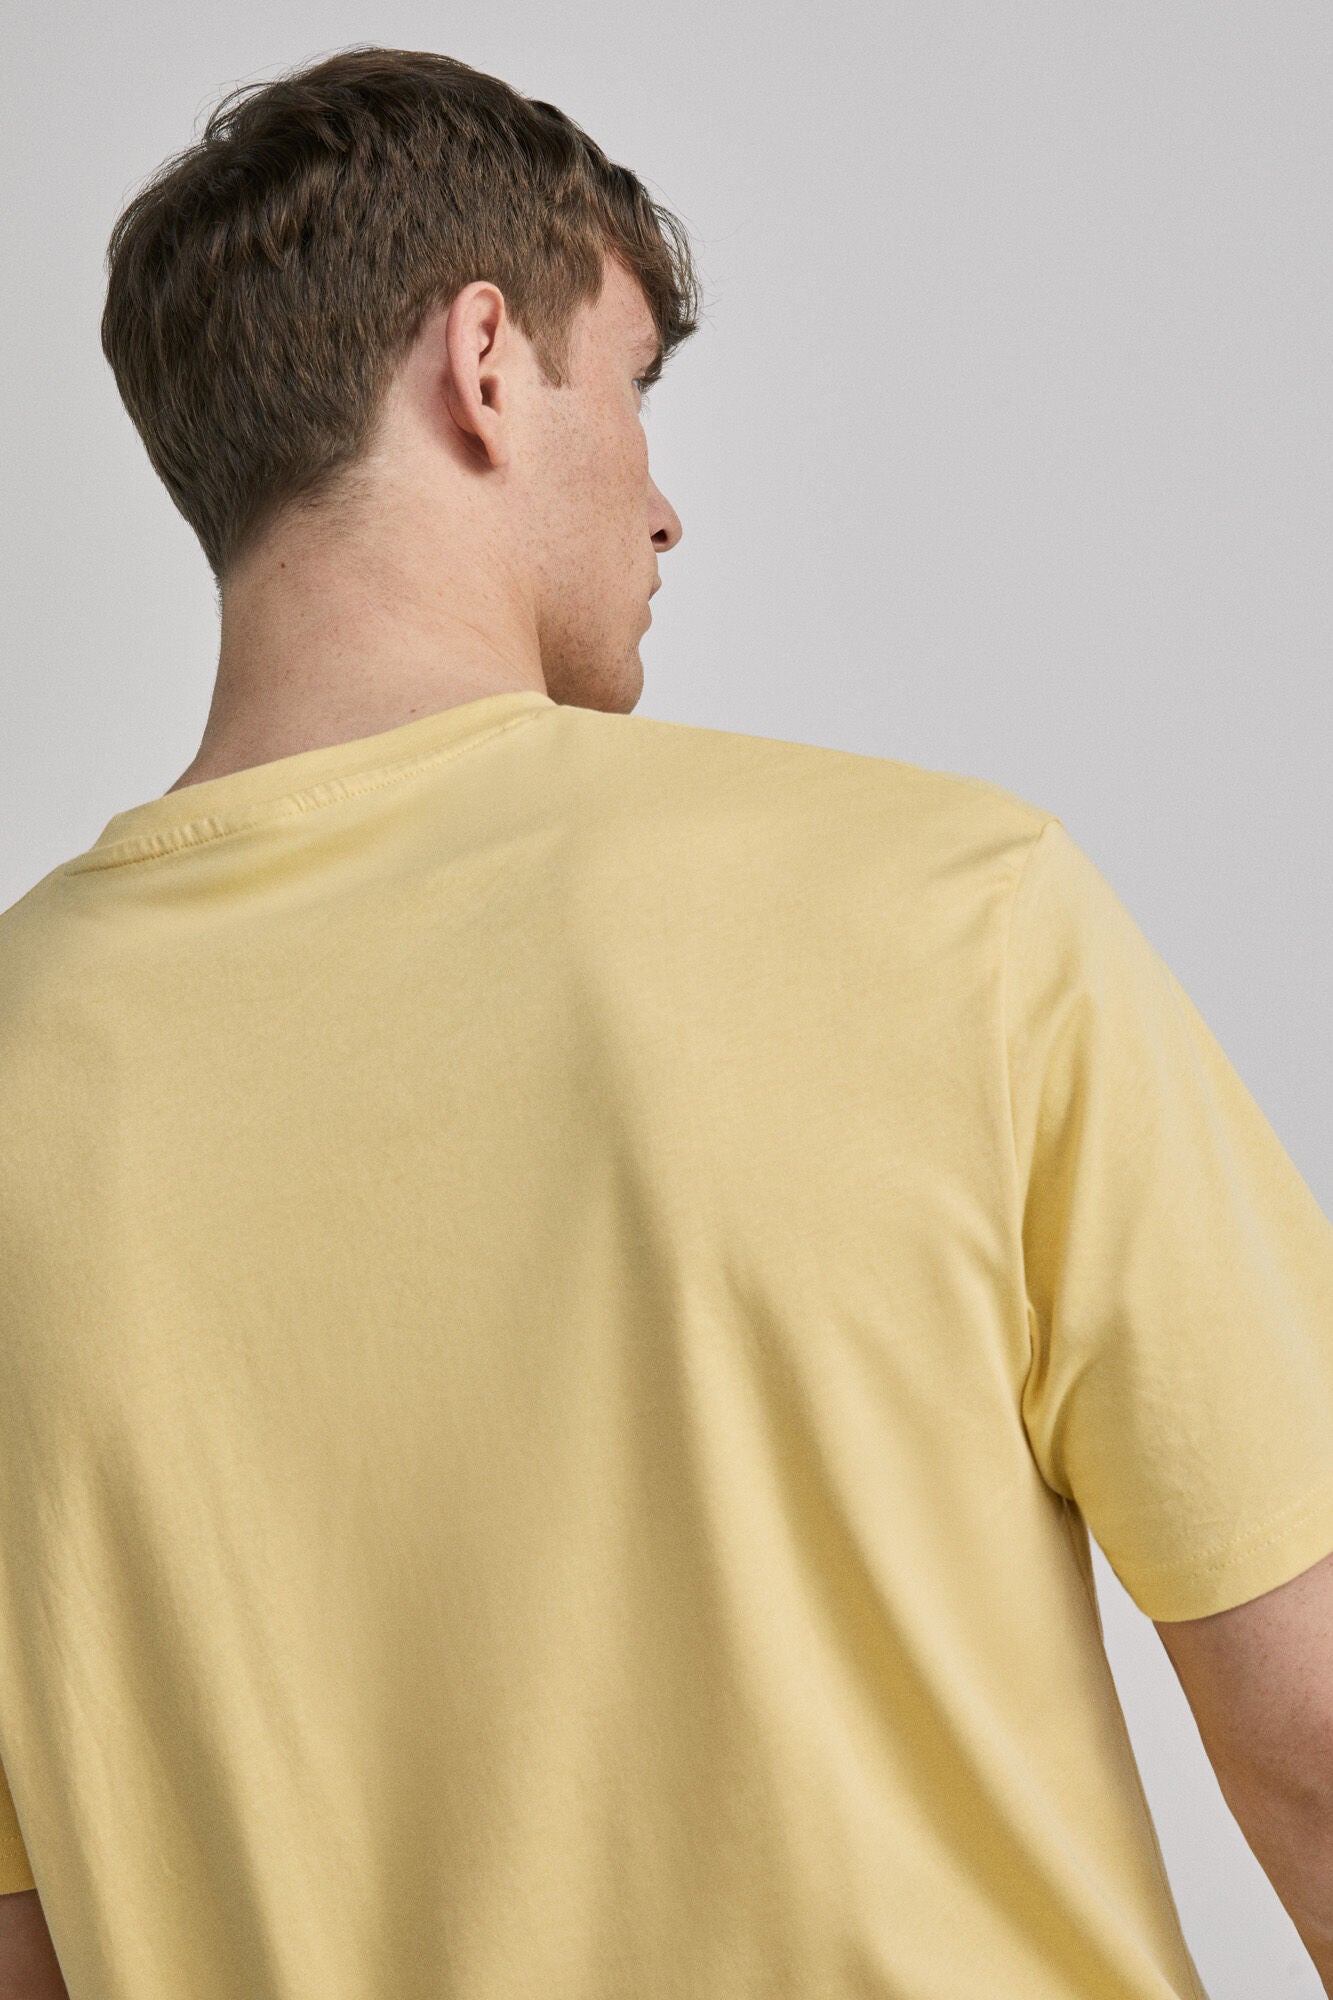 Yellow Utopical Printed T-shirt